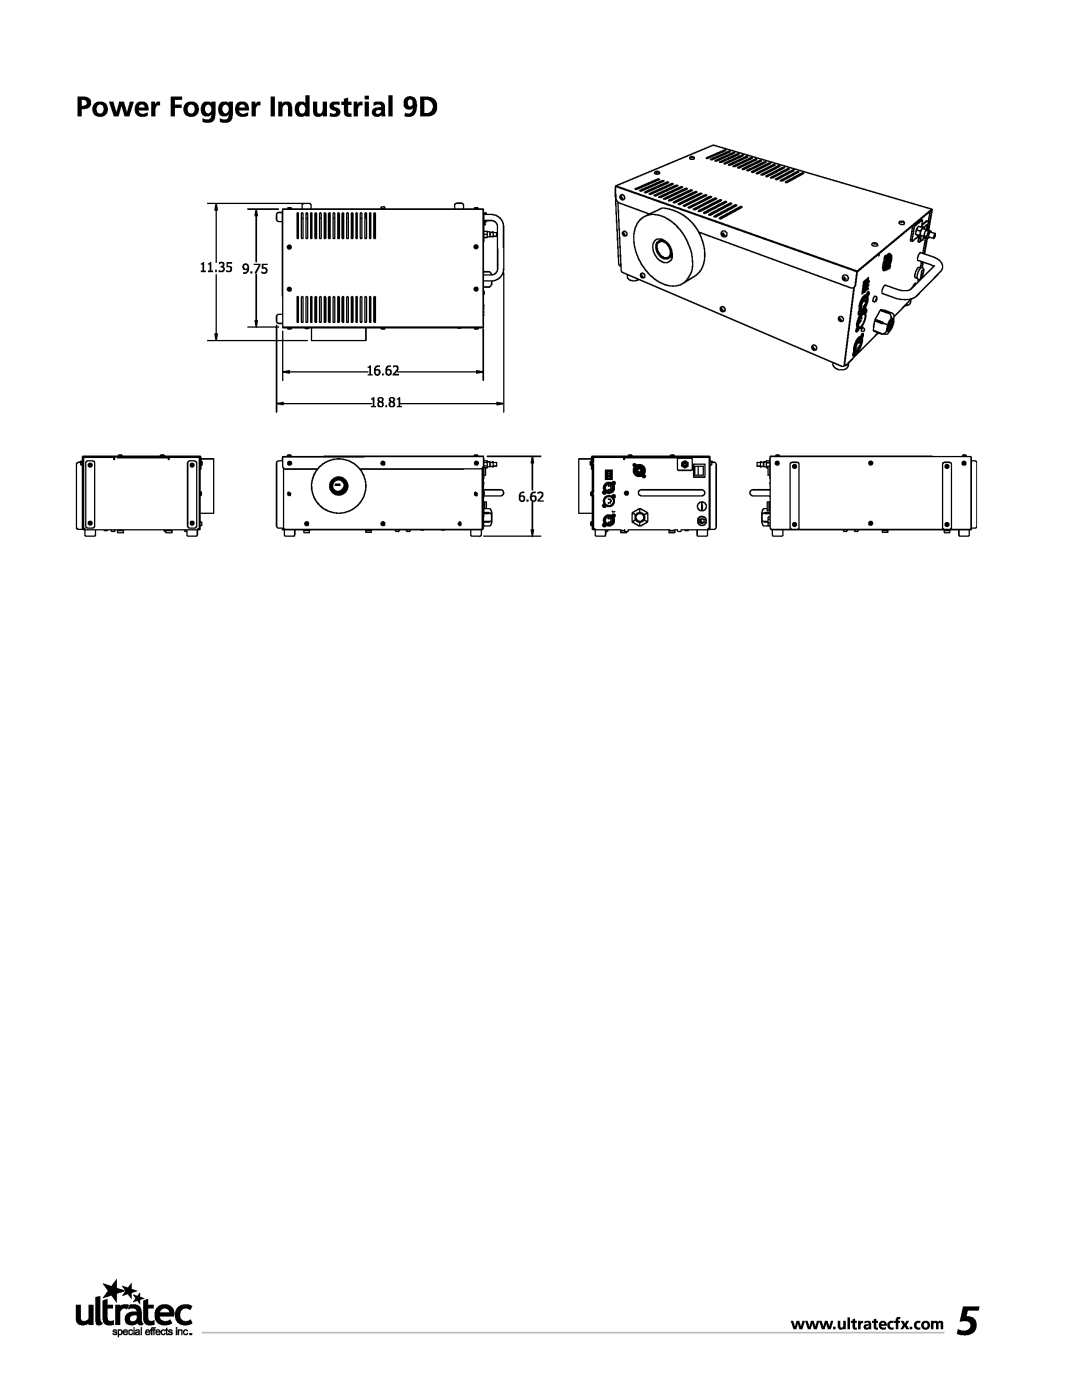 Ultratec PFI-9D manual Power Fogger Industrial 9D 